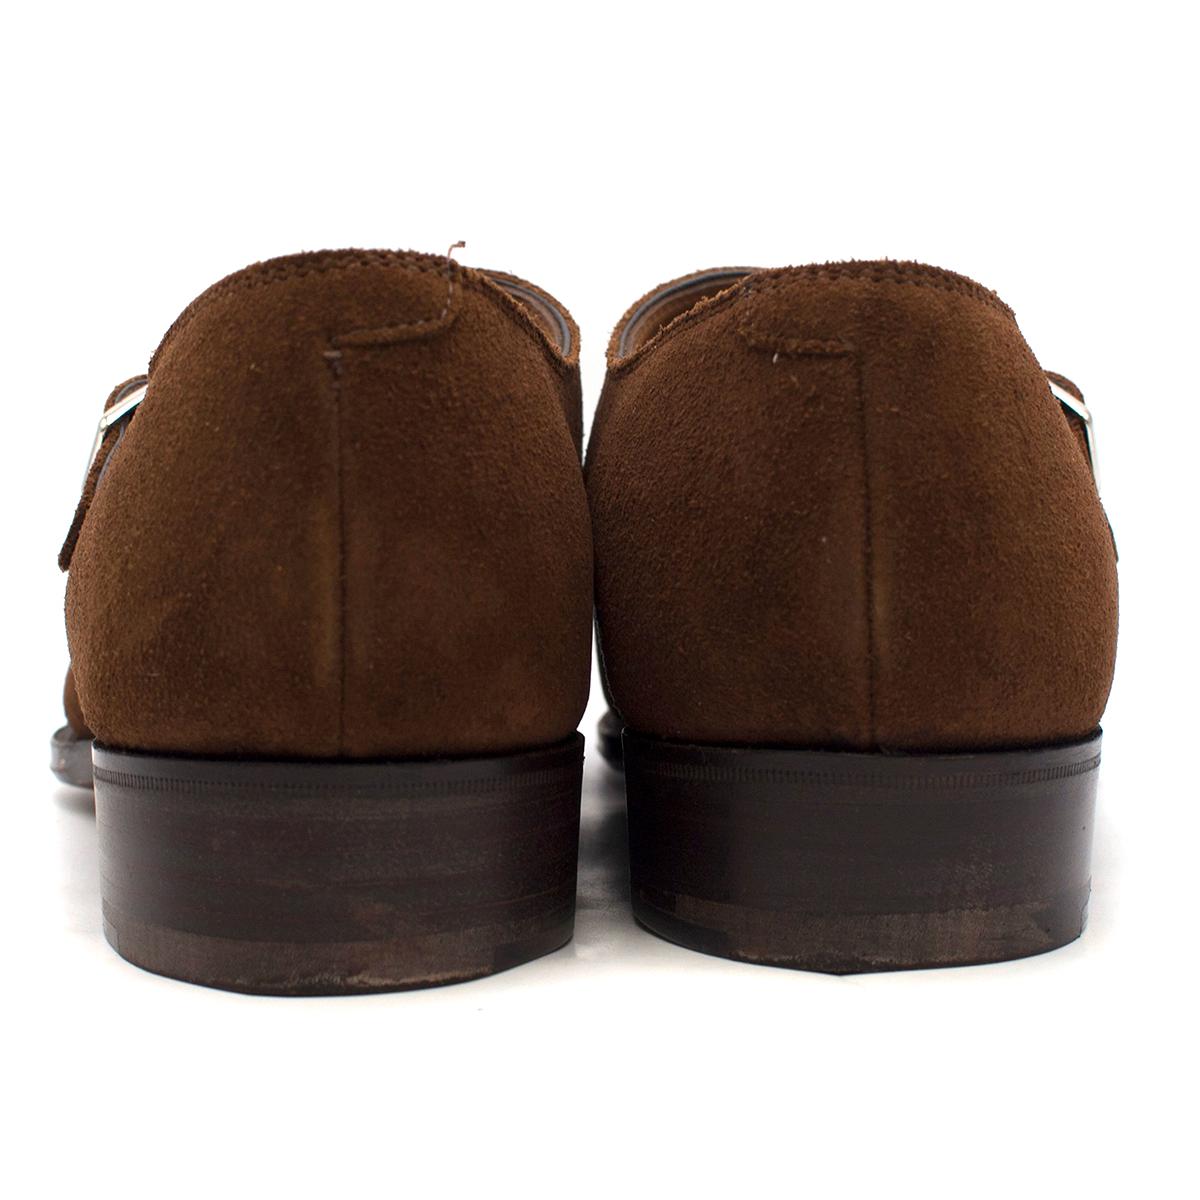 brown suede monk shoes